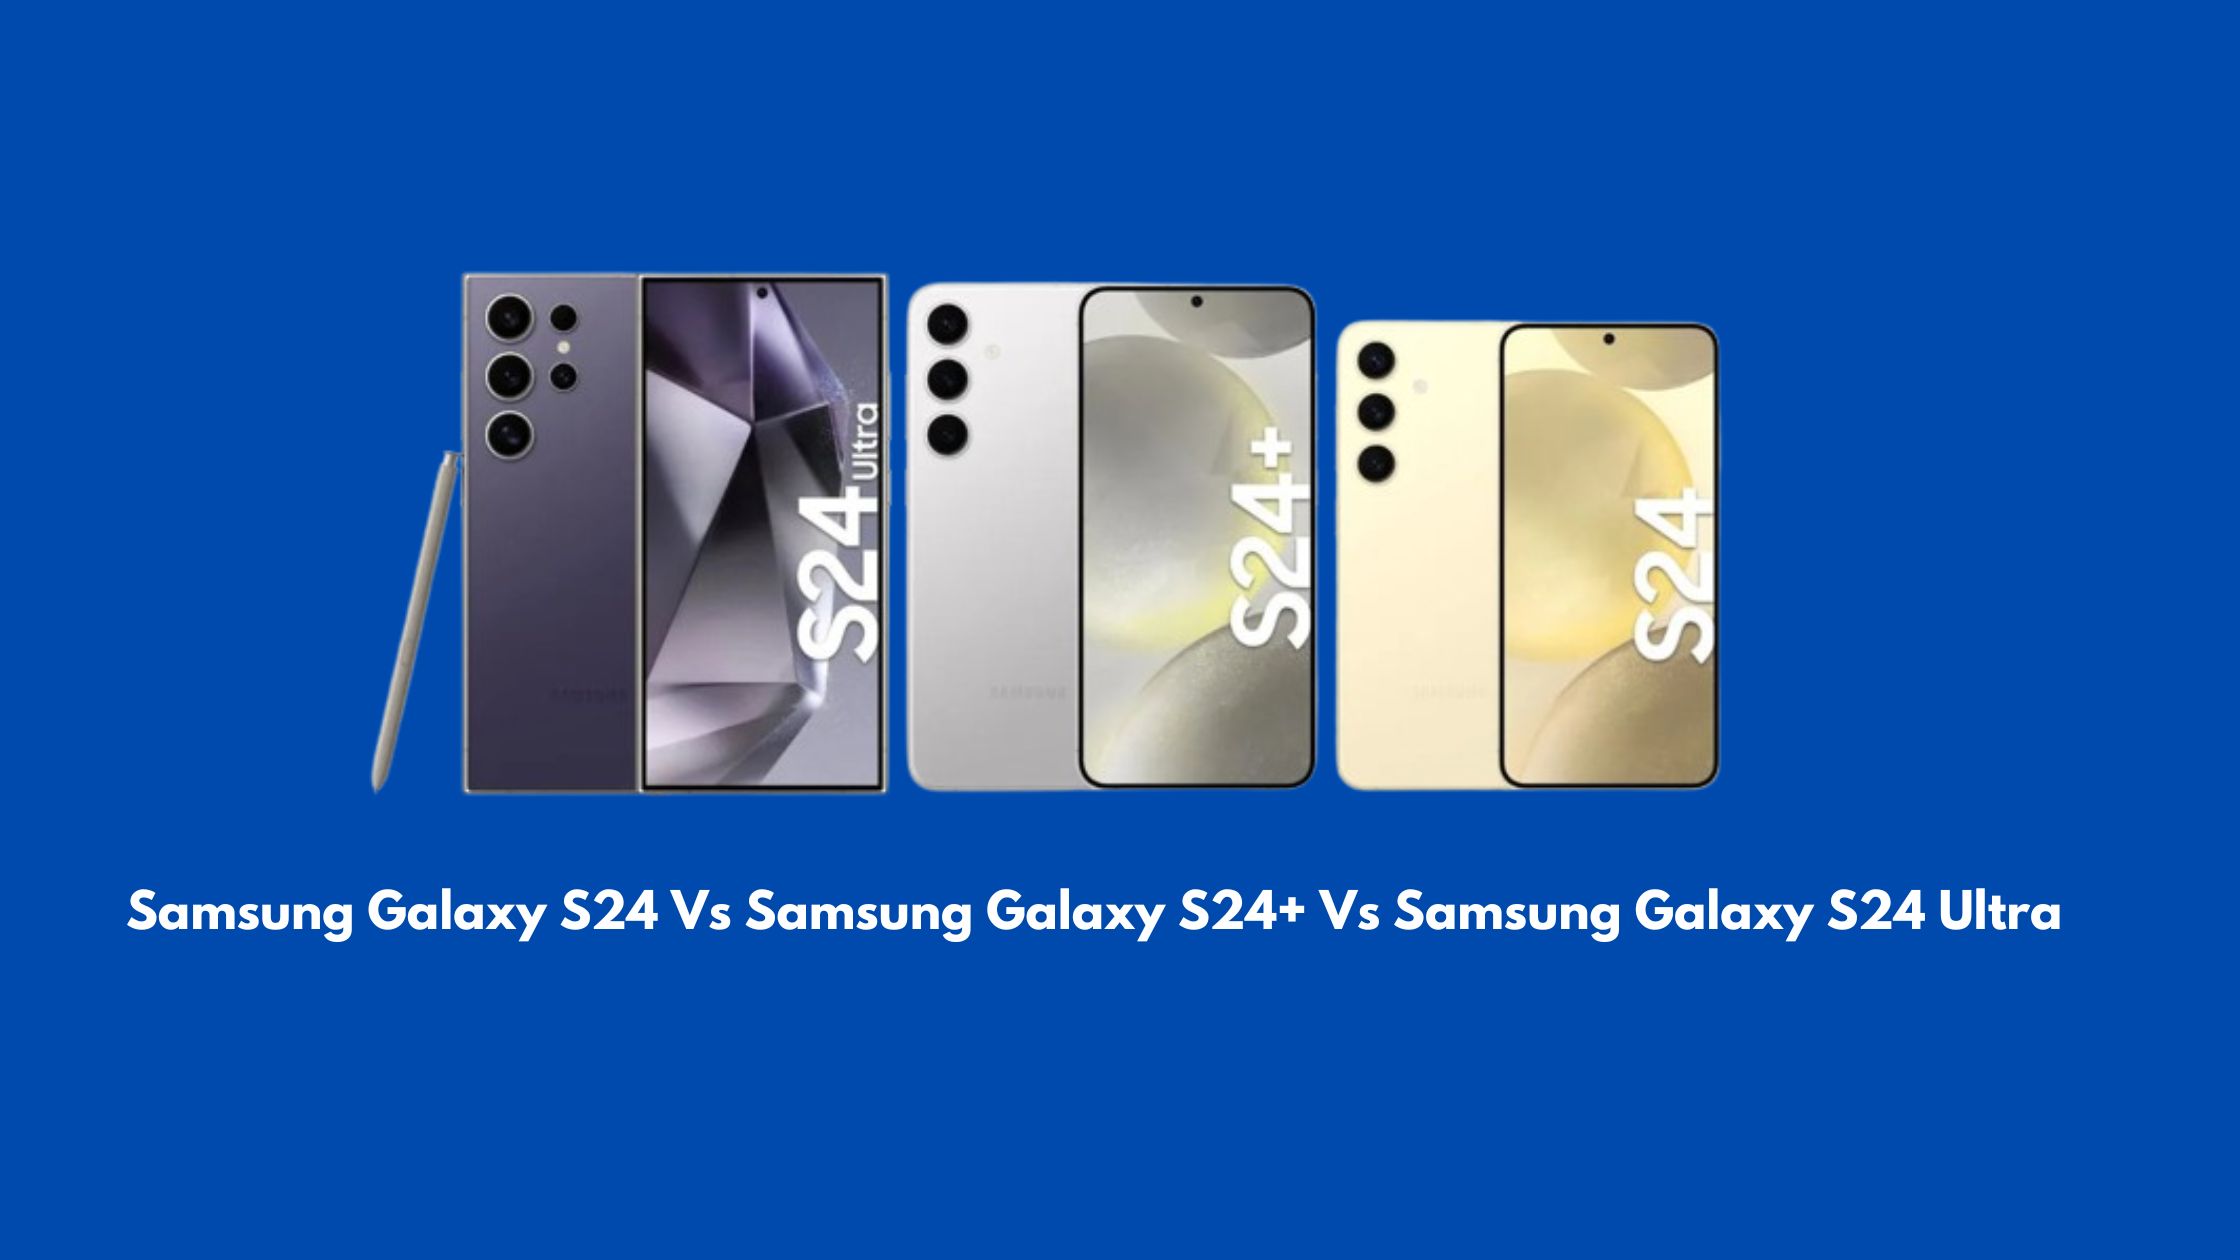 Samsung Galaxy S24 Vs Samsung Galaxy S24+ Vs Samsung Galaxy S24 Ultra